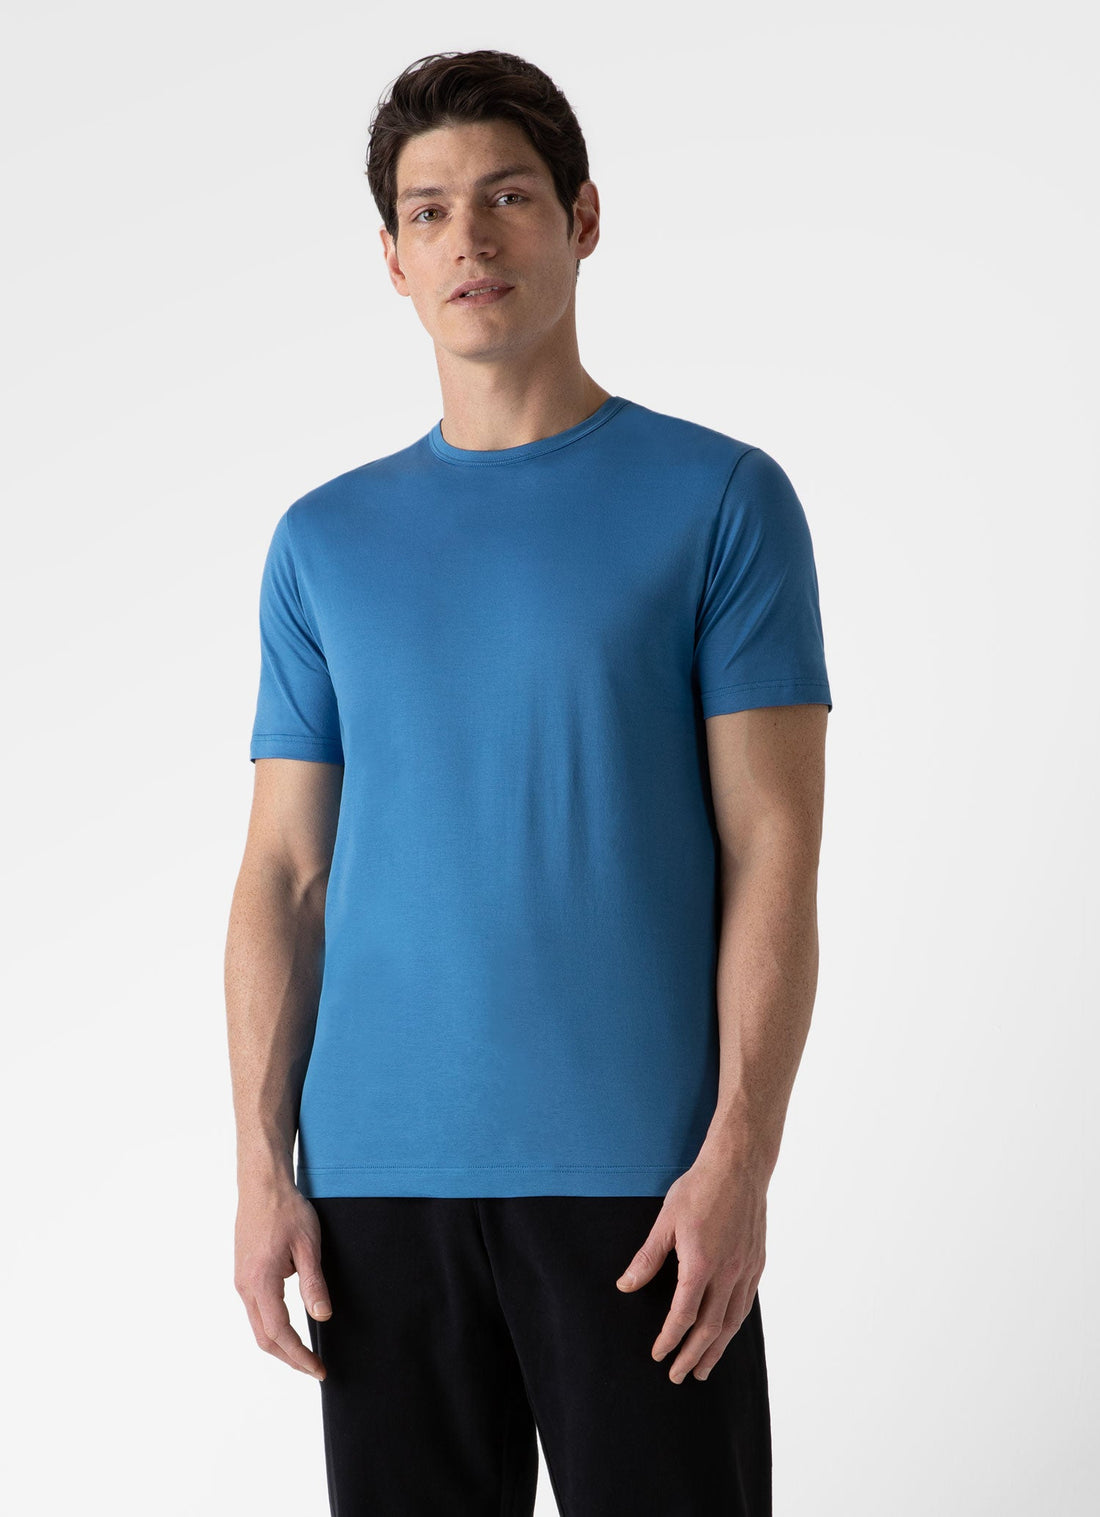 Men's Classic T-shirt in Blue Jean